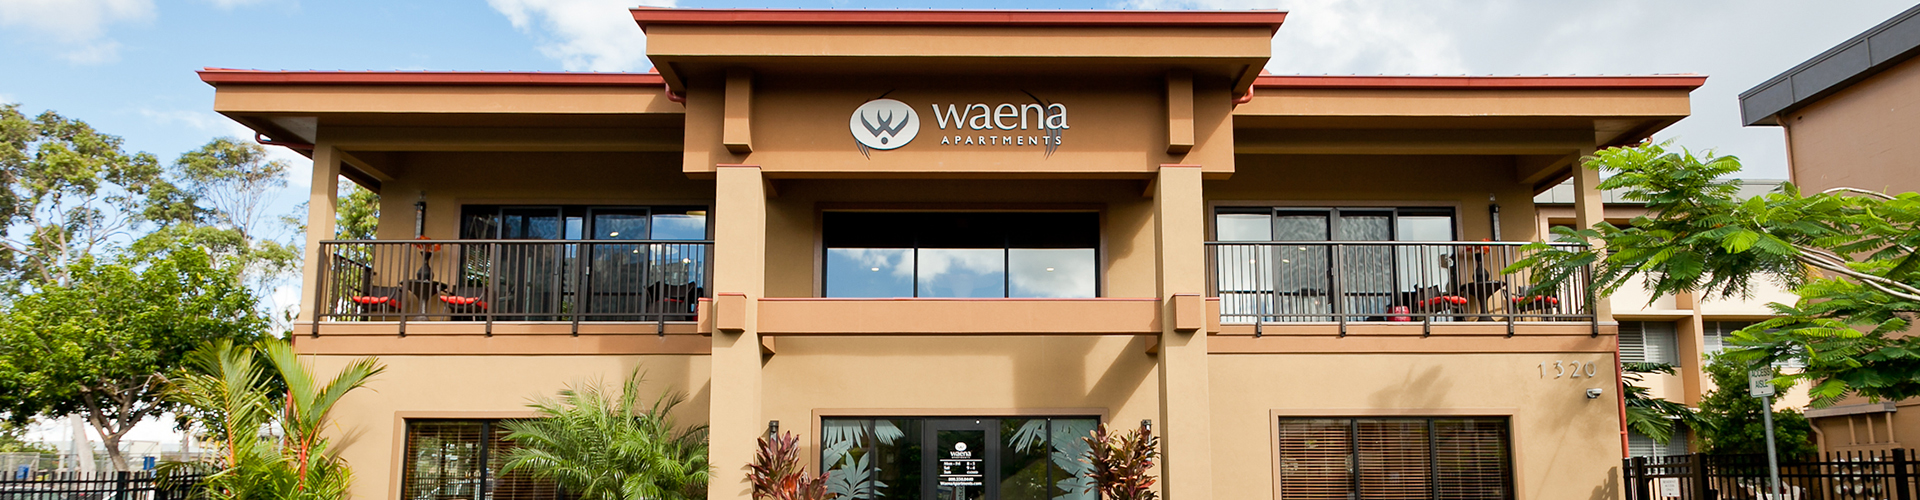 Waena leasing office header